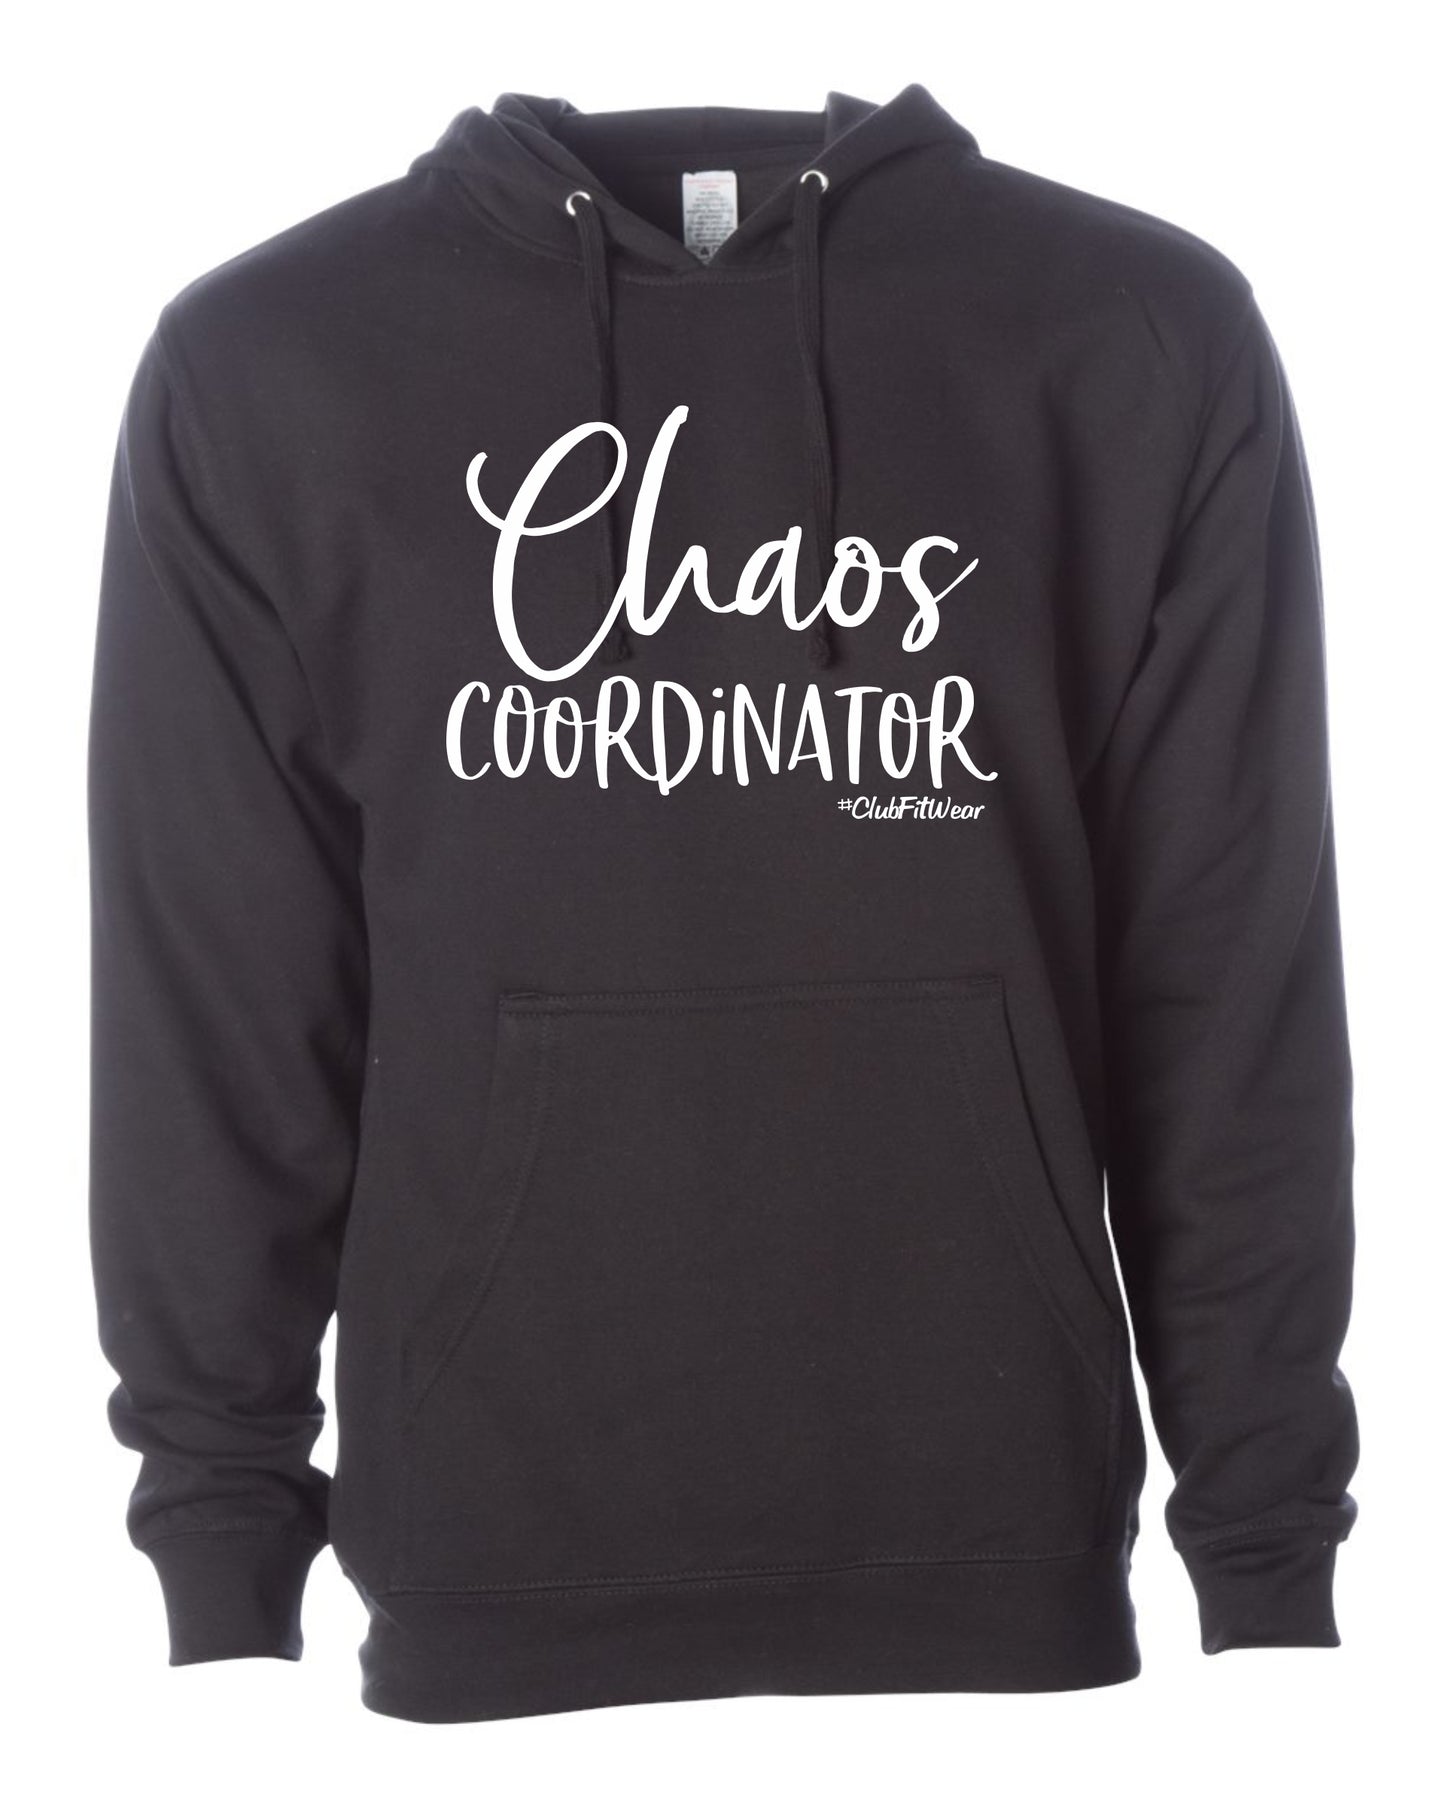 Chaos Coordinator - Hoodie